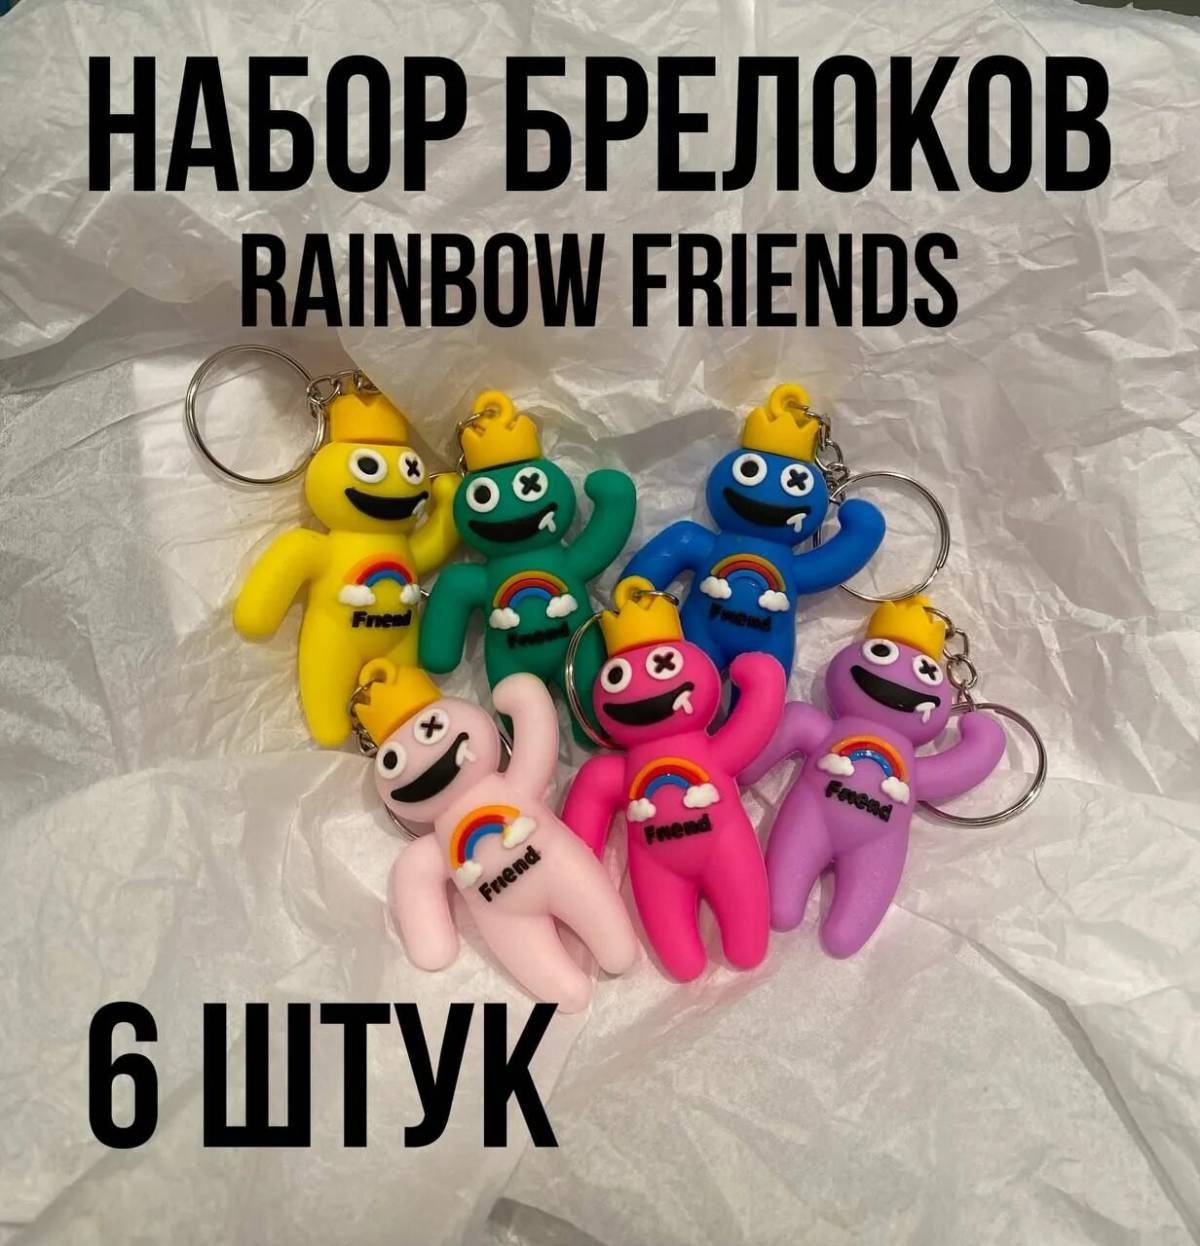 Rainbow friends #7